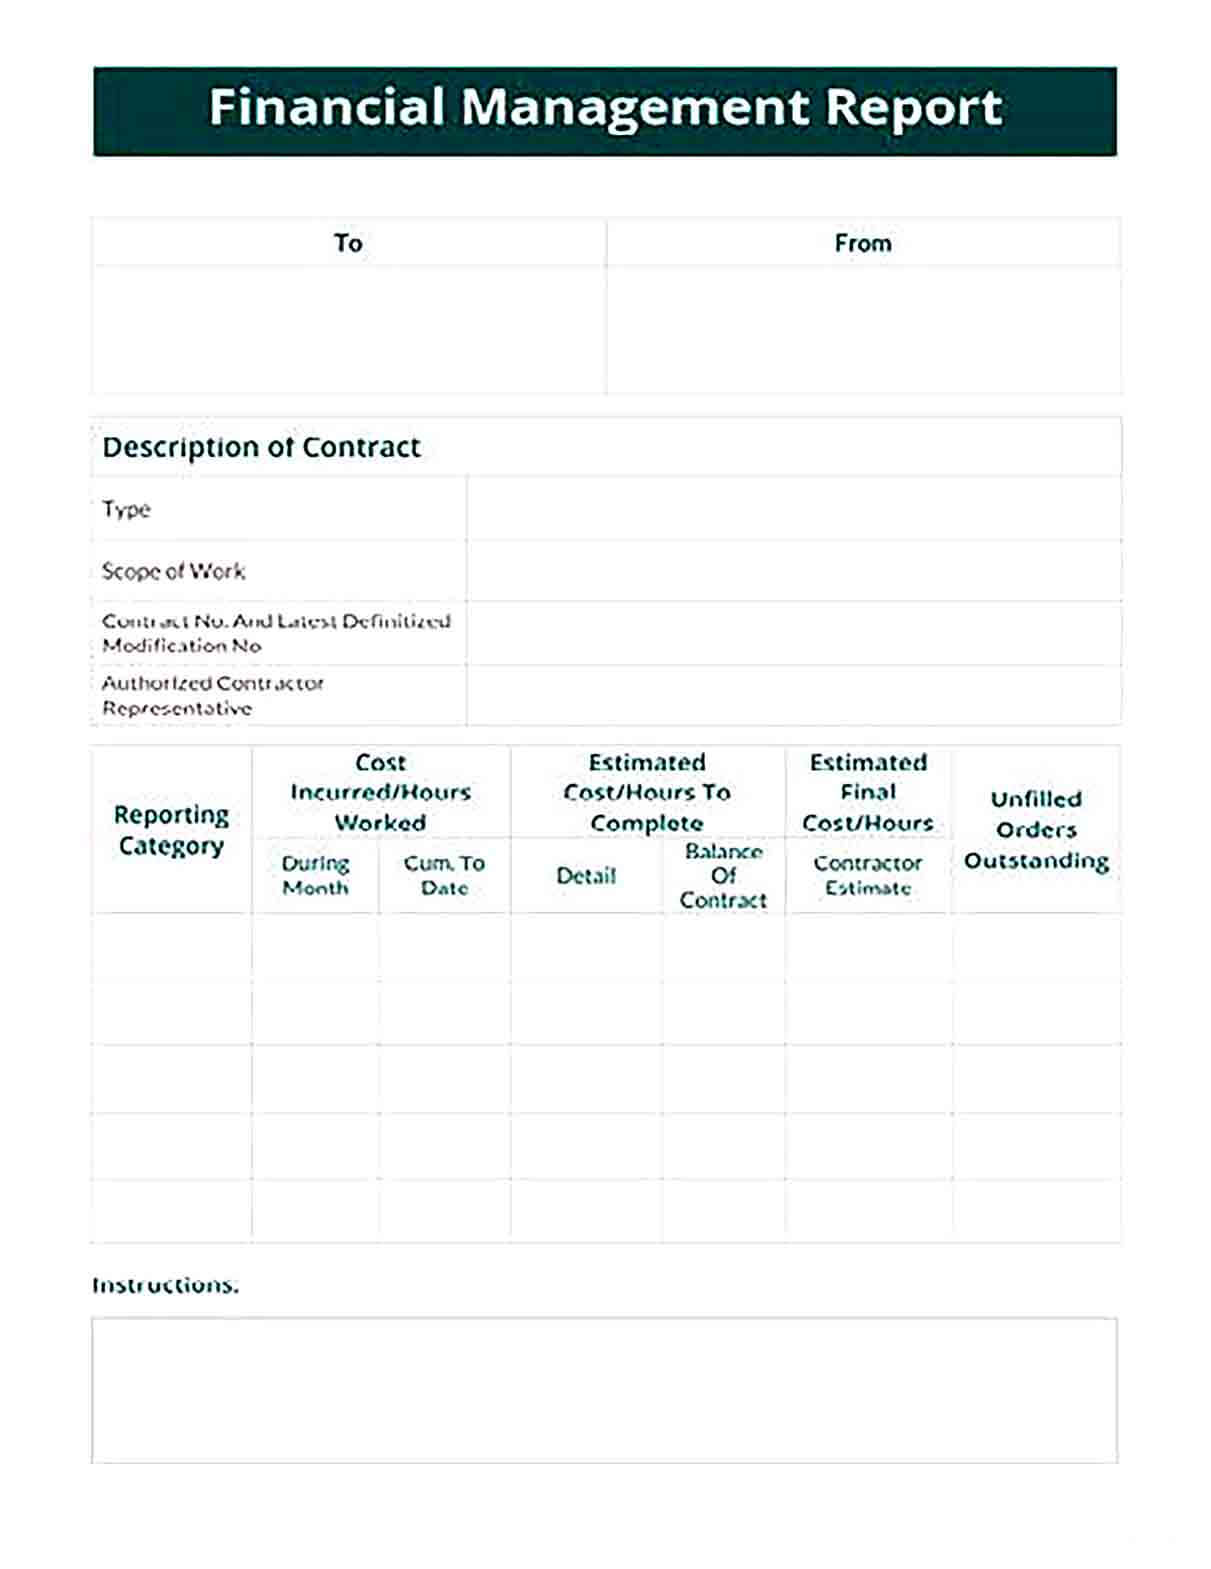 Sample financial management report template 1 440x622 1